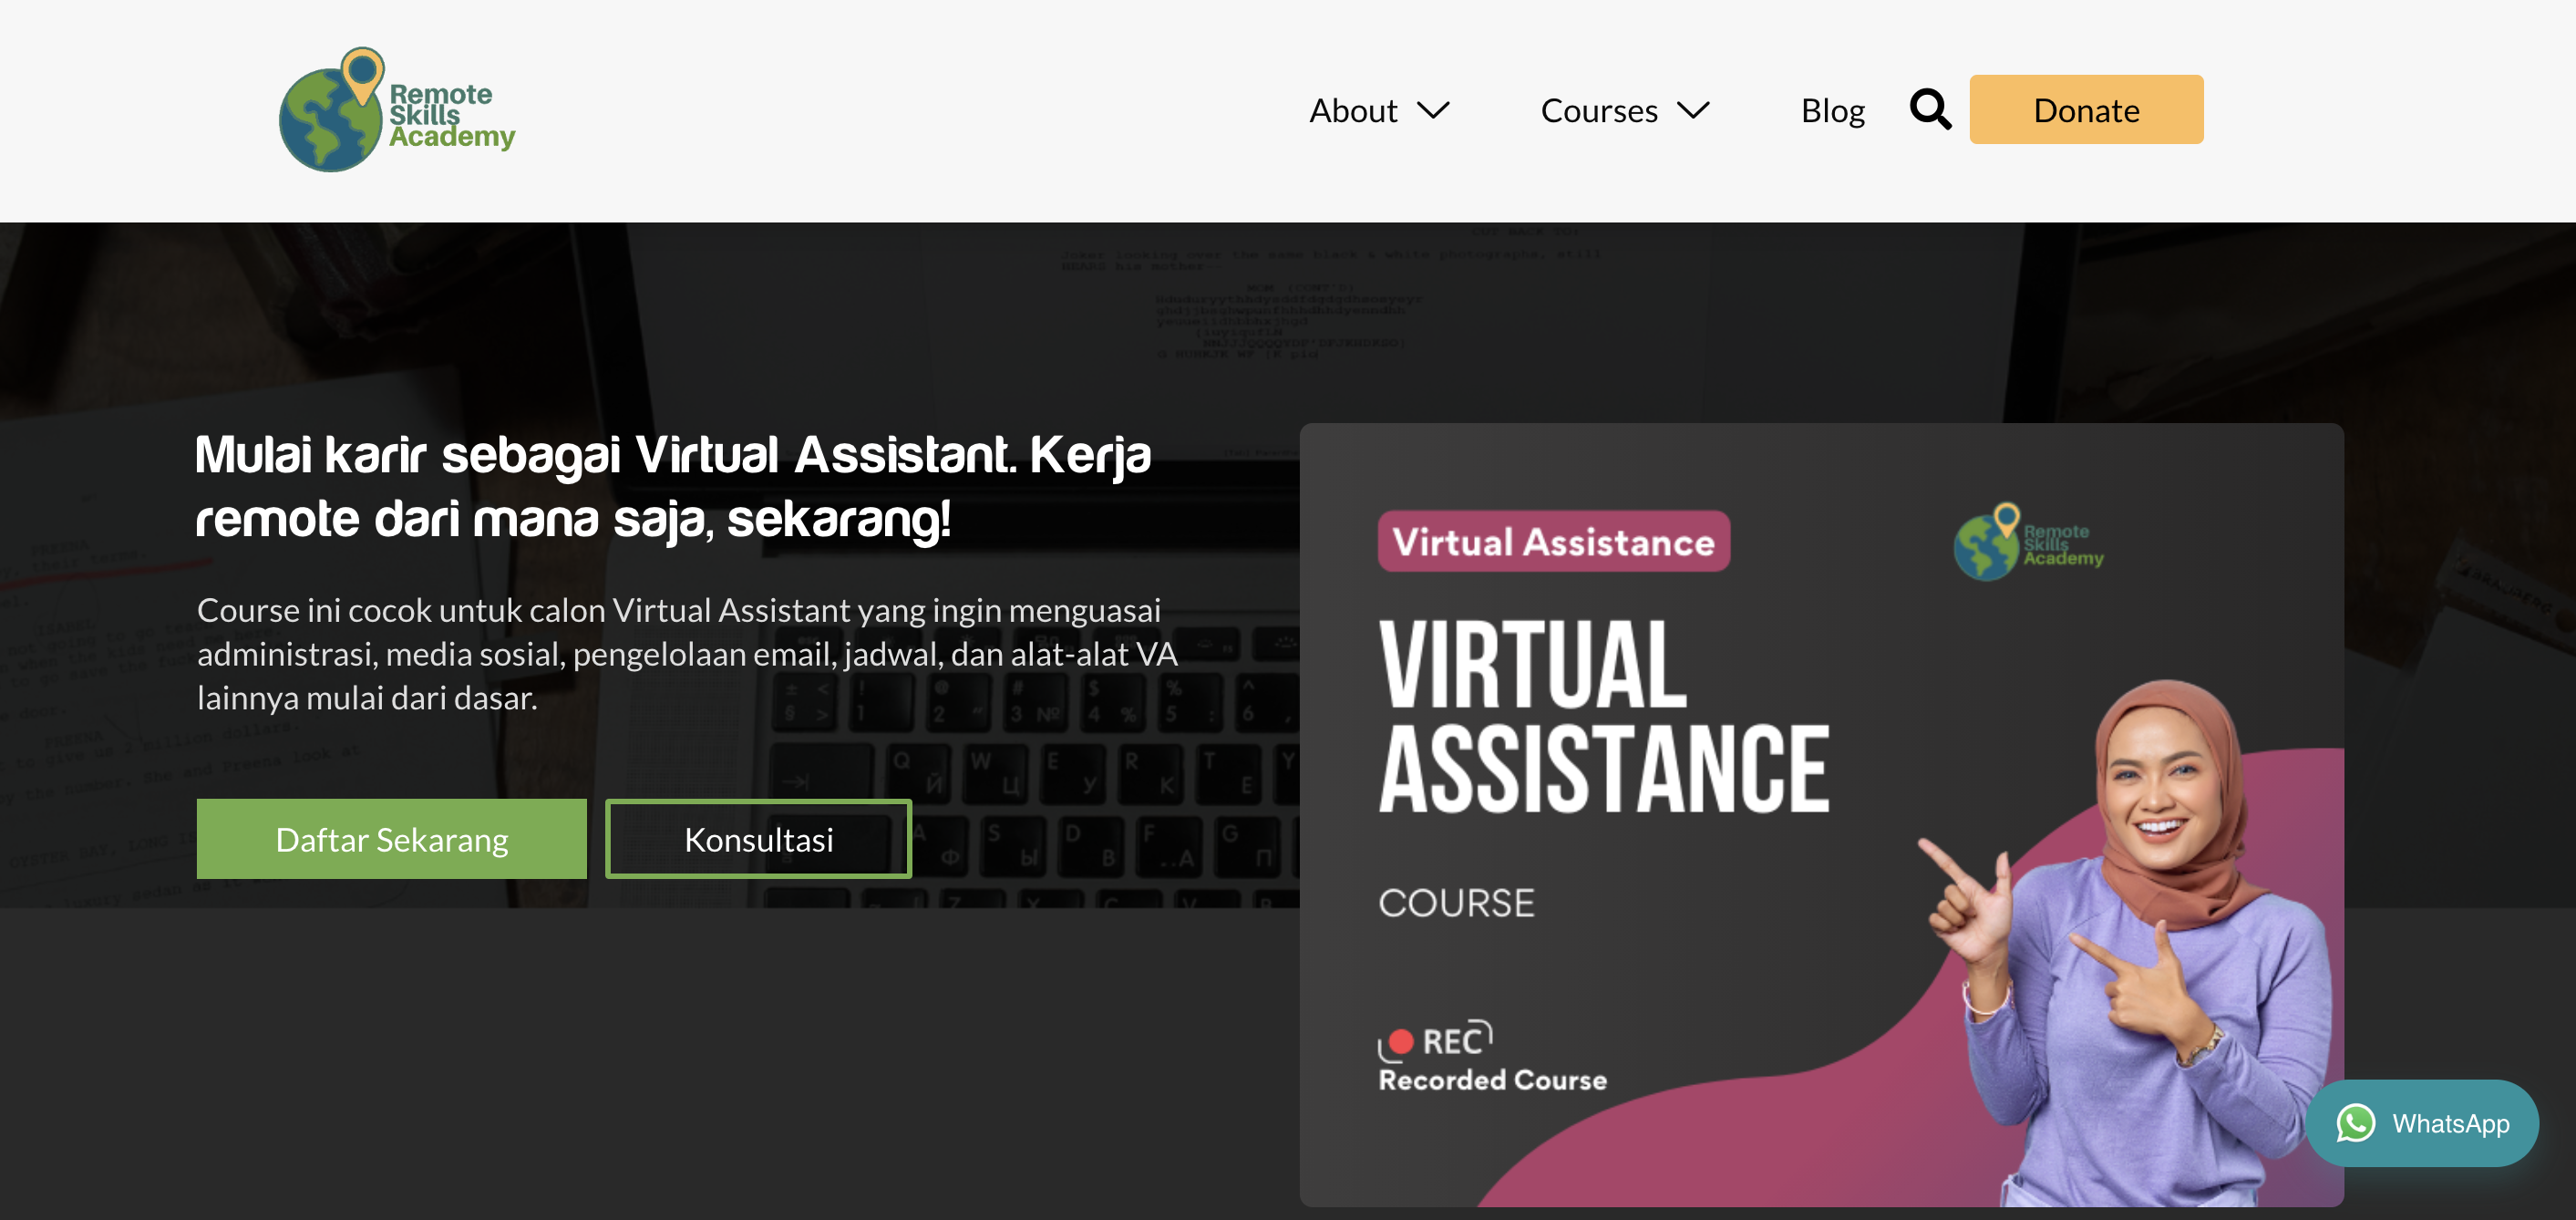 Tempat Kursus Virtual Assistant - Remote Skill Academy